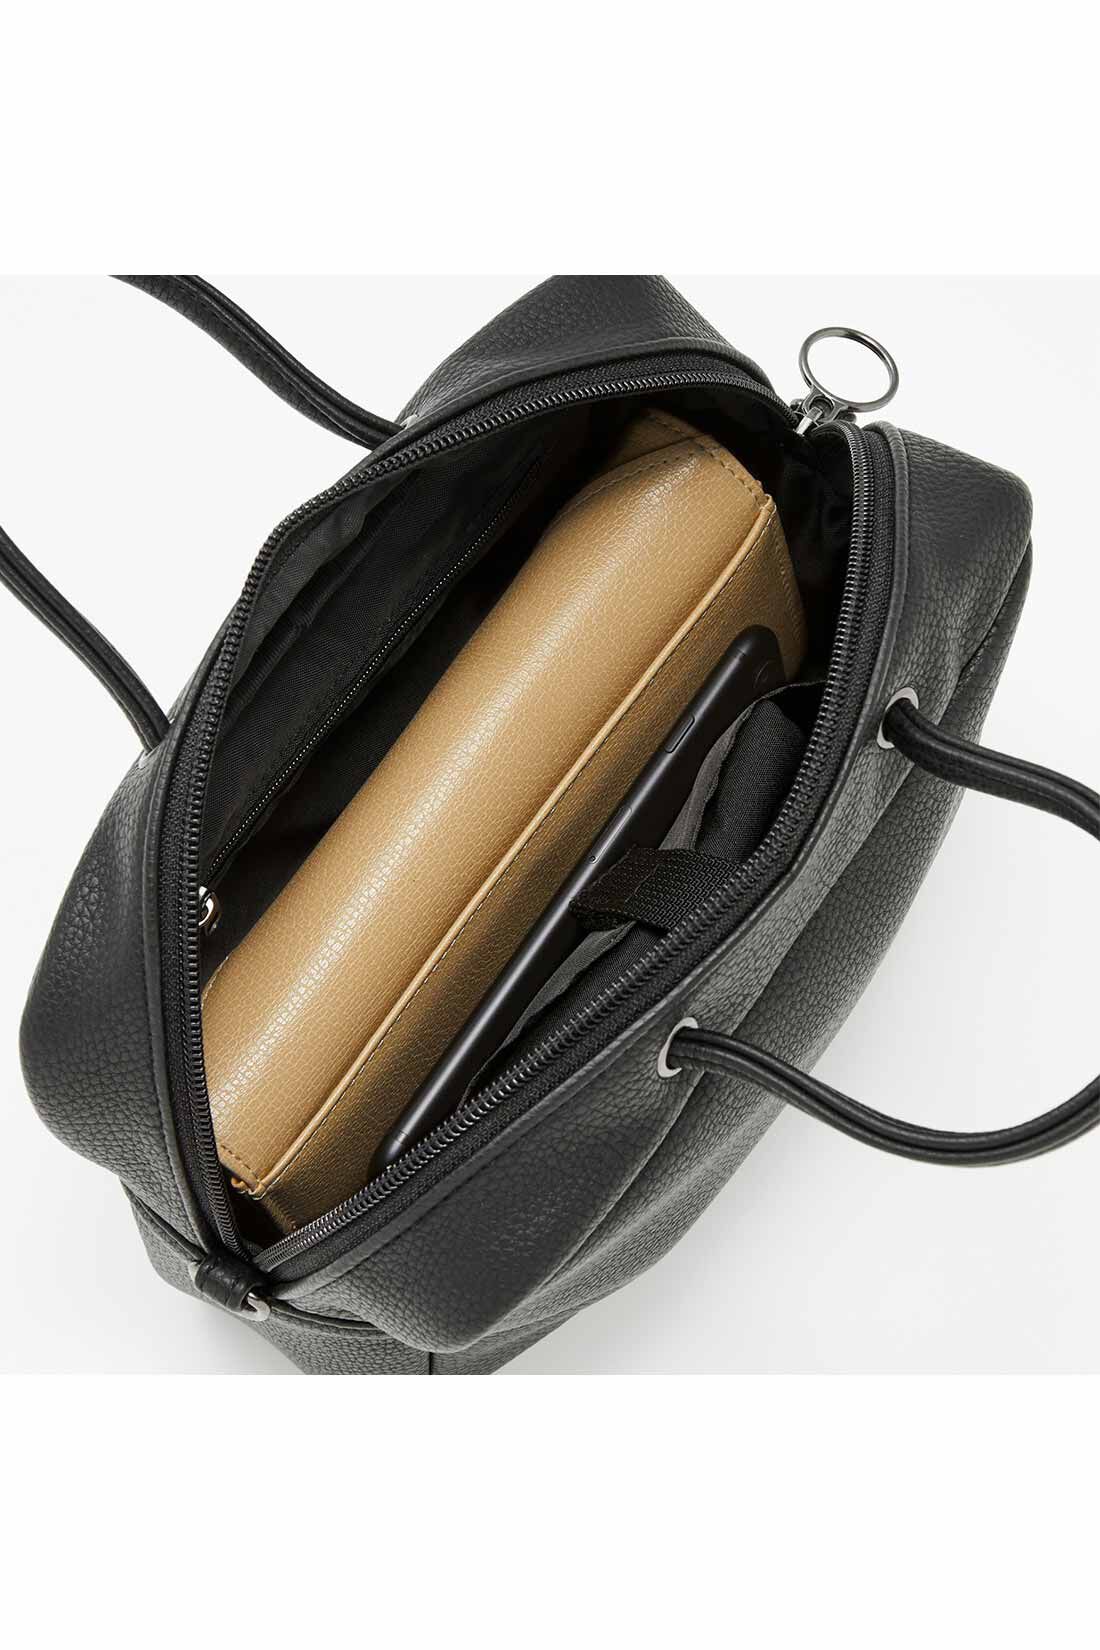 IEDIT|IEDIT[イディット]　福田麻琴さんコラボ ショルダーでデイリーにも！ ミニマルなフォーマルバッグとサブバッグセット〈ブラック〉|サブバッグを収納するポケットやファスナーポケット付き。長財布やふくさもすっぽり。